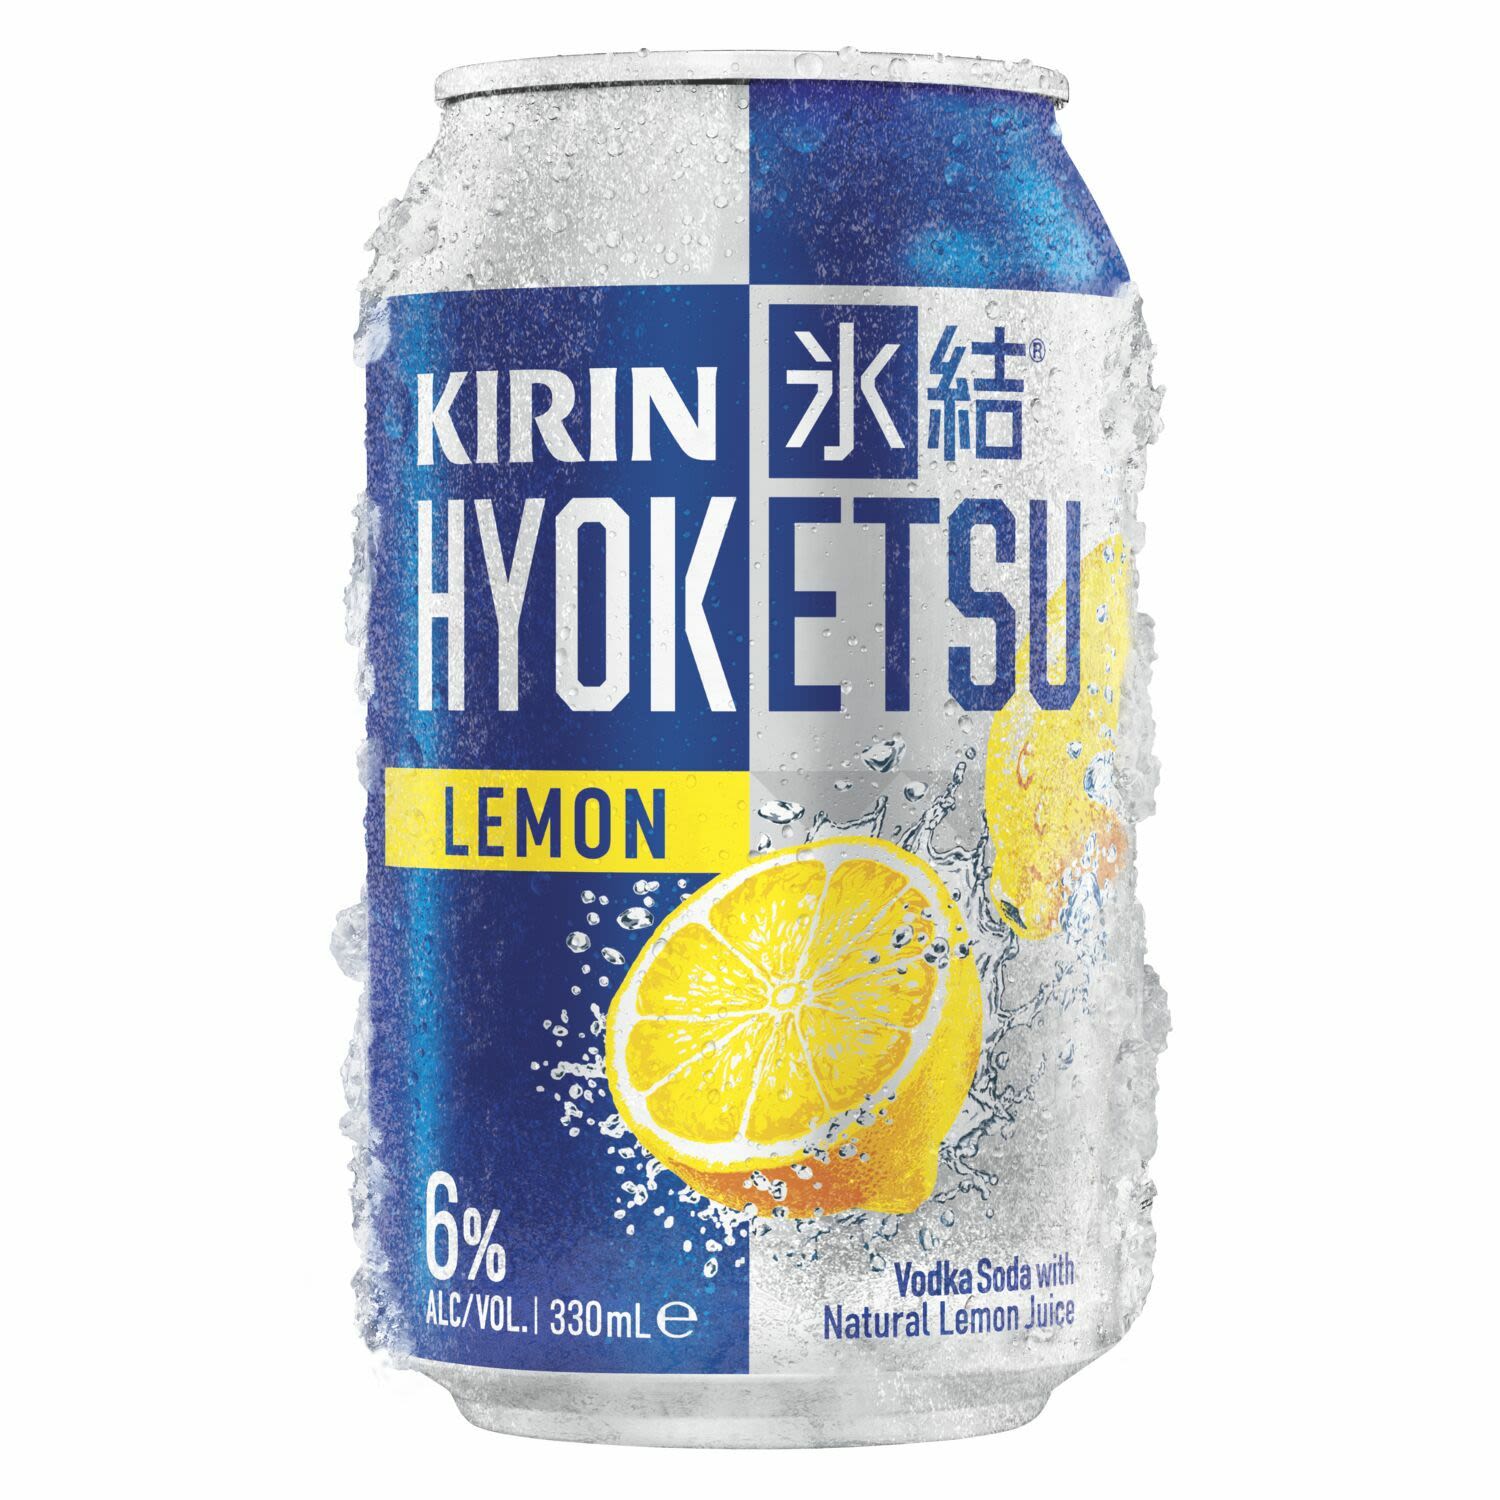 Kirin Hyoketsu Lemon Can 330mL